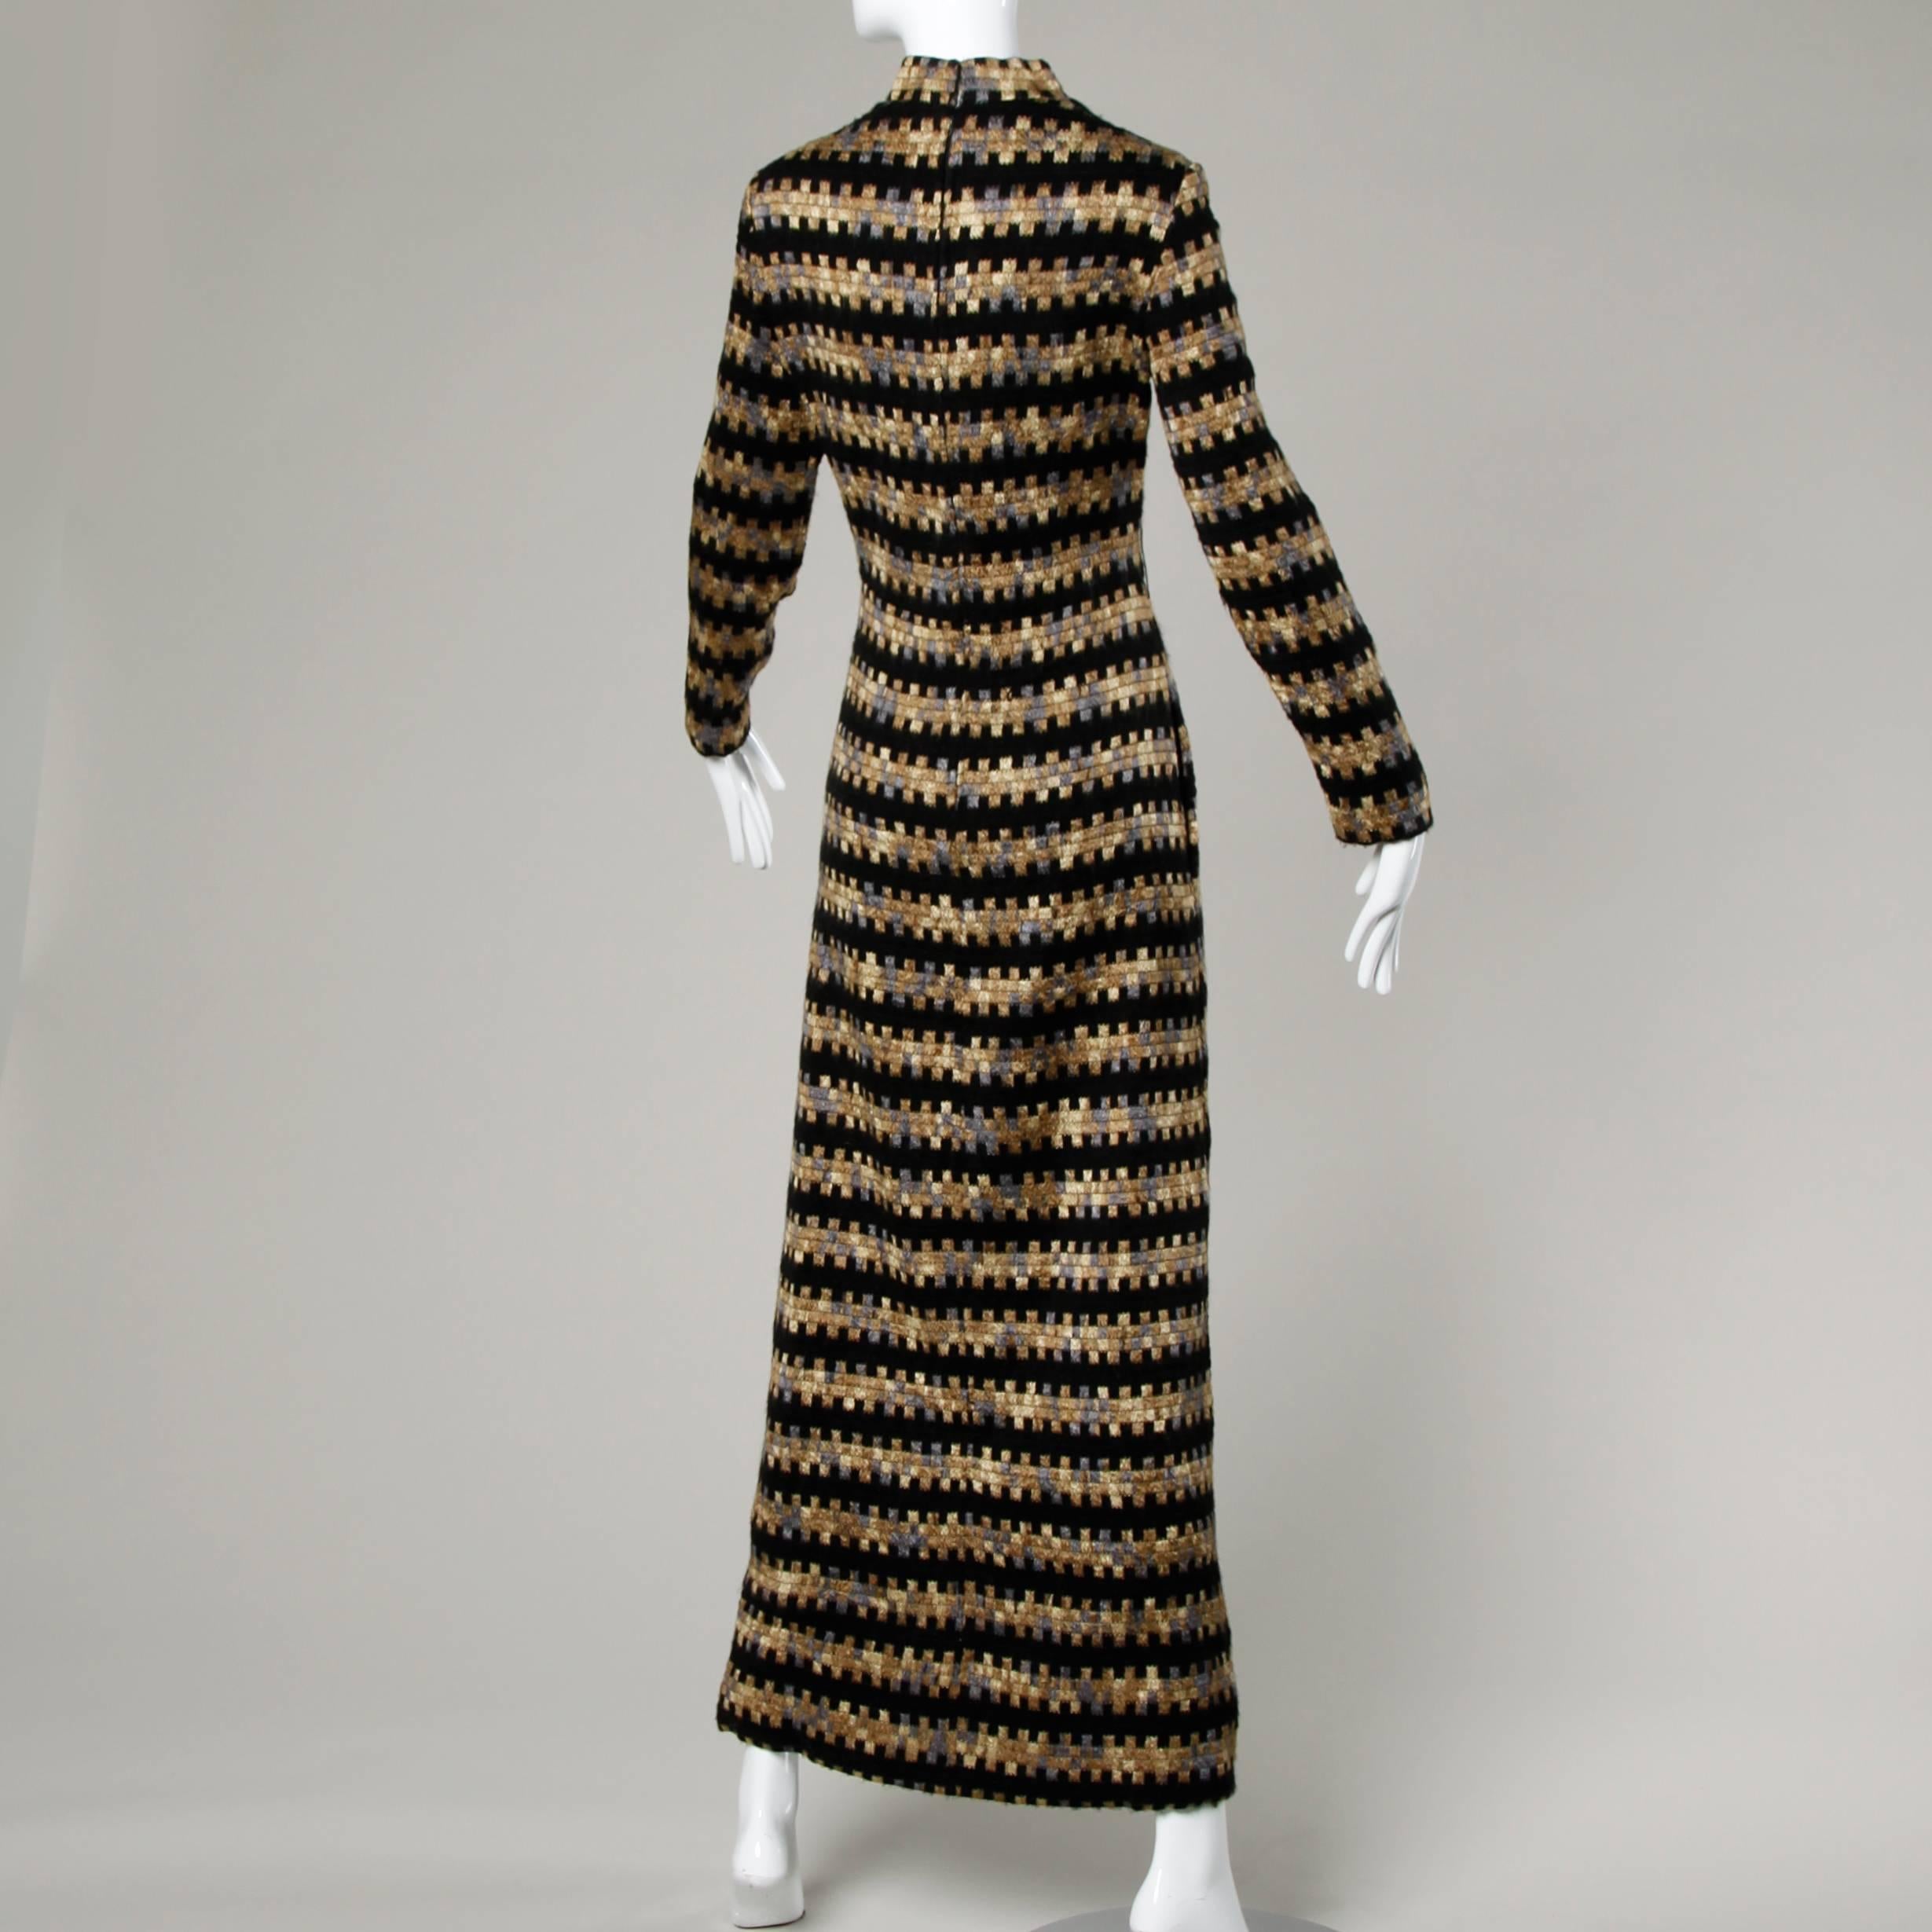 Ole Borden for Rembrandt Vintage 1970s Heavy Woven Maxi Dress 1